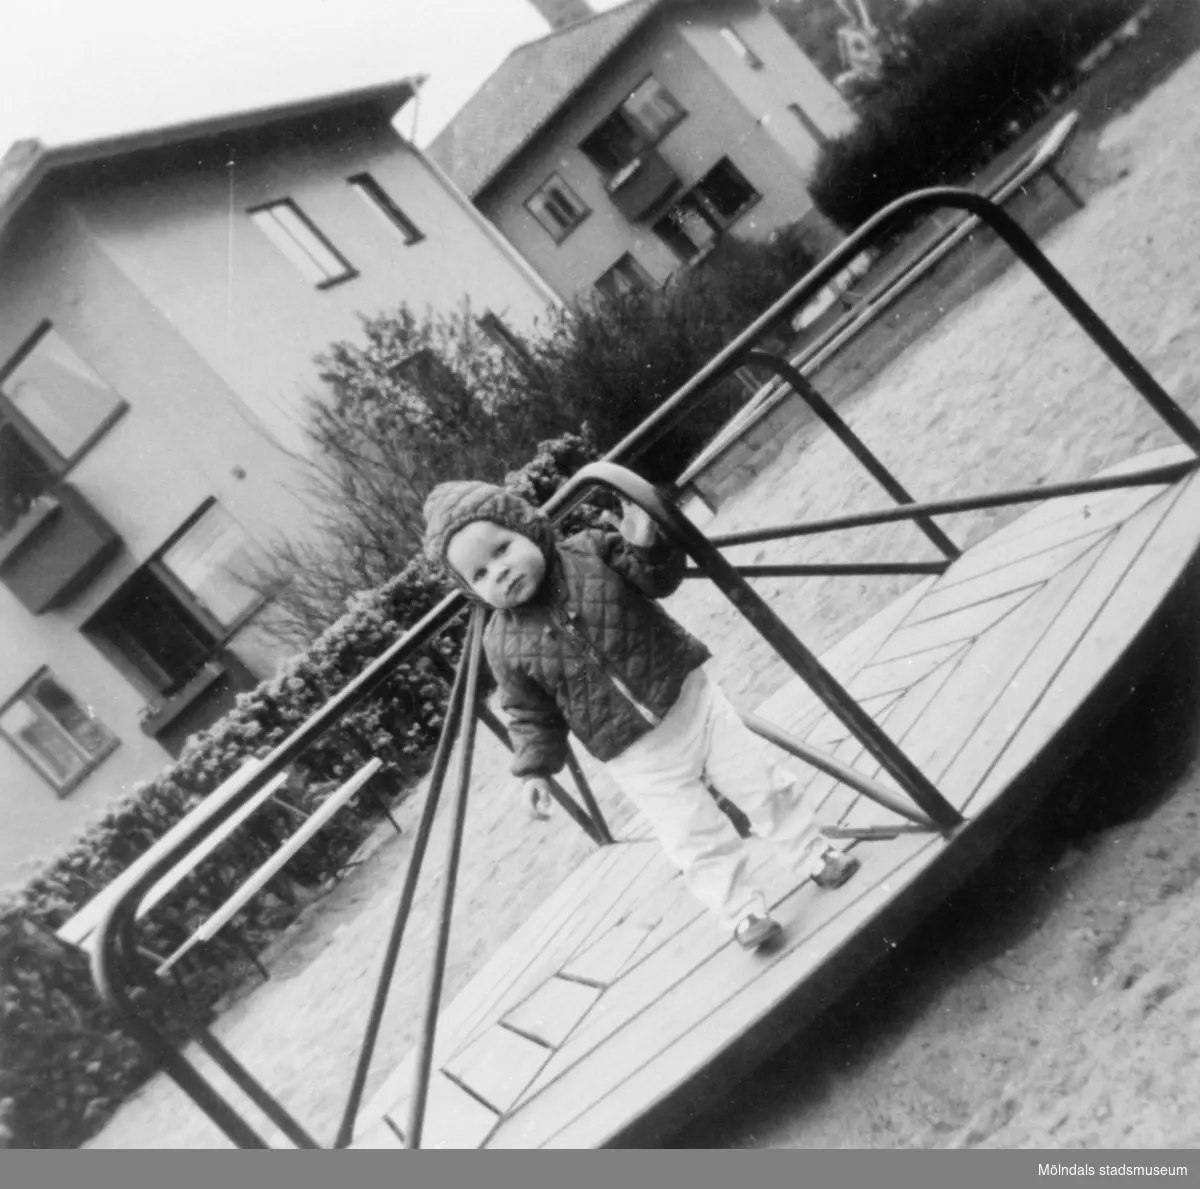 Ett litet barn ståendes i karusell i en lekpark, 1965. Brunnsgatan 4 och 6 syns i bakgrunden.